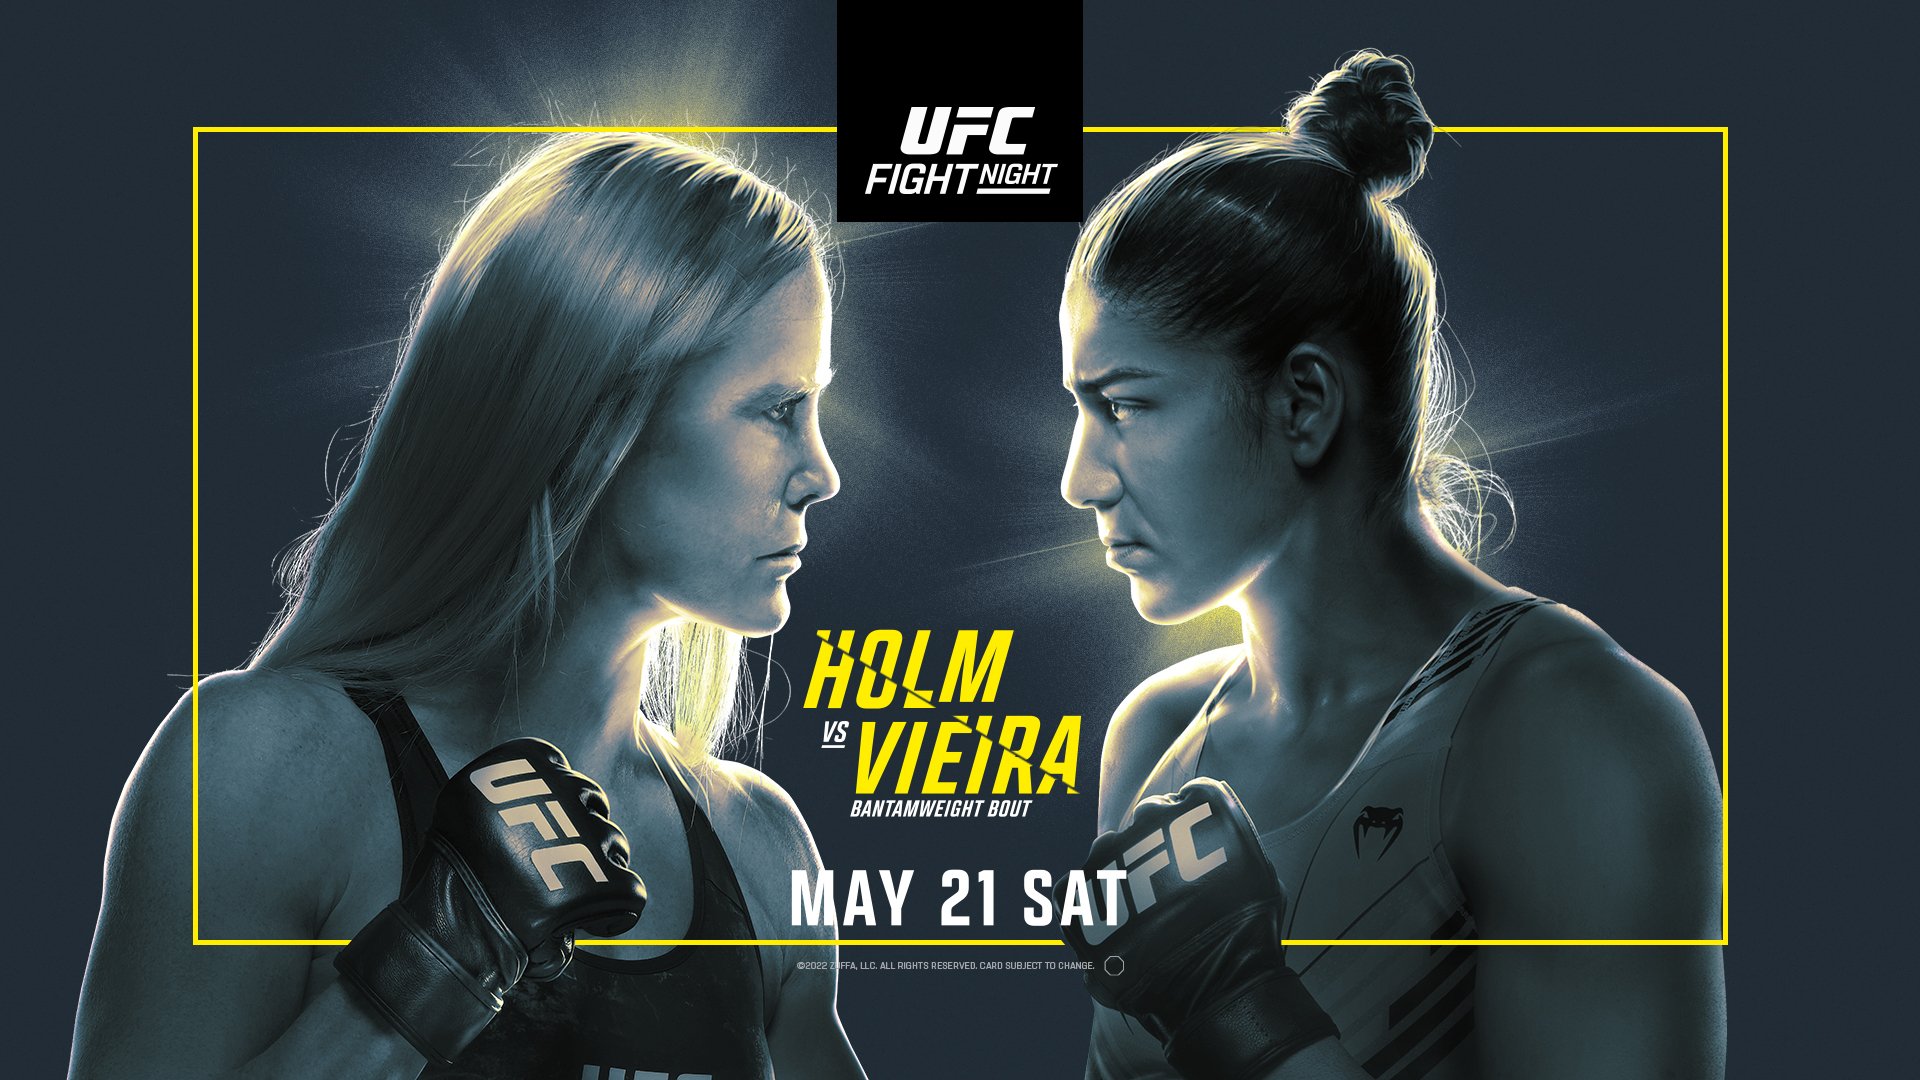 UFC Fight Night Holly Holm vs Ketlen Vieira